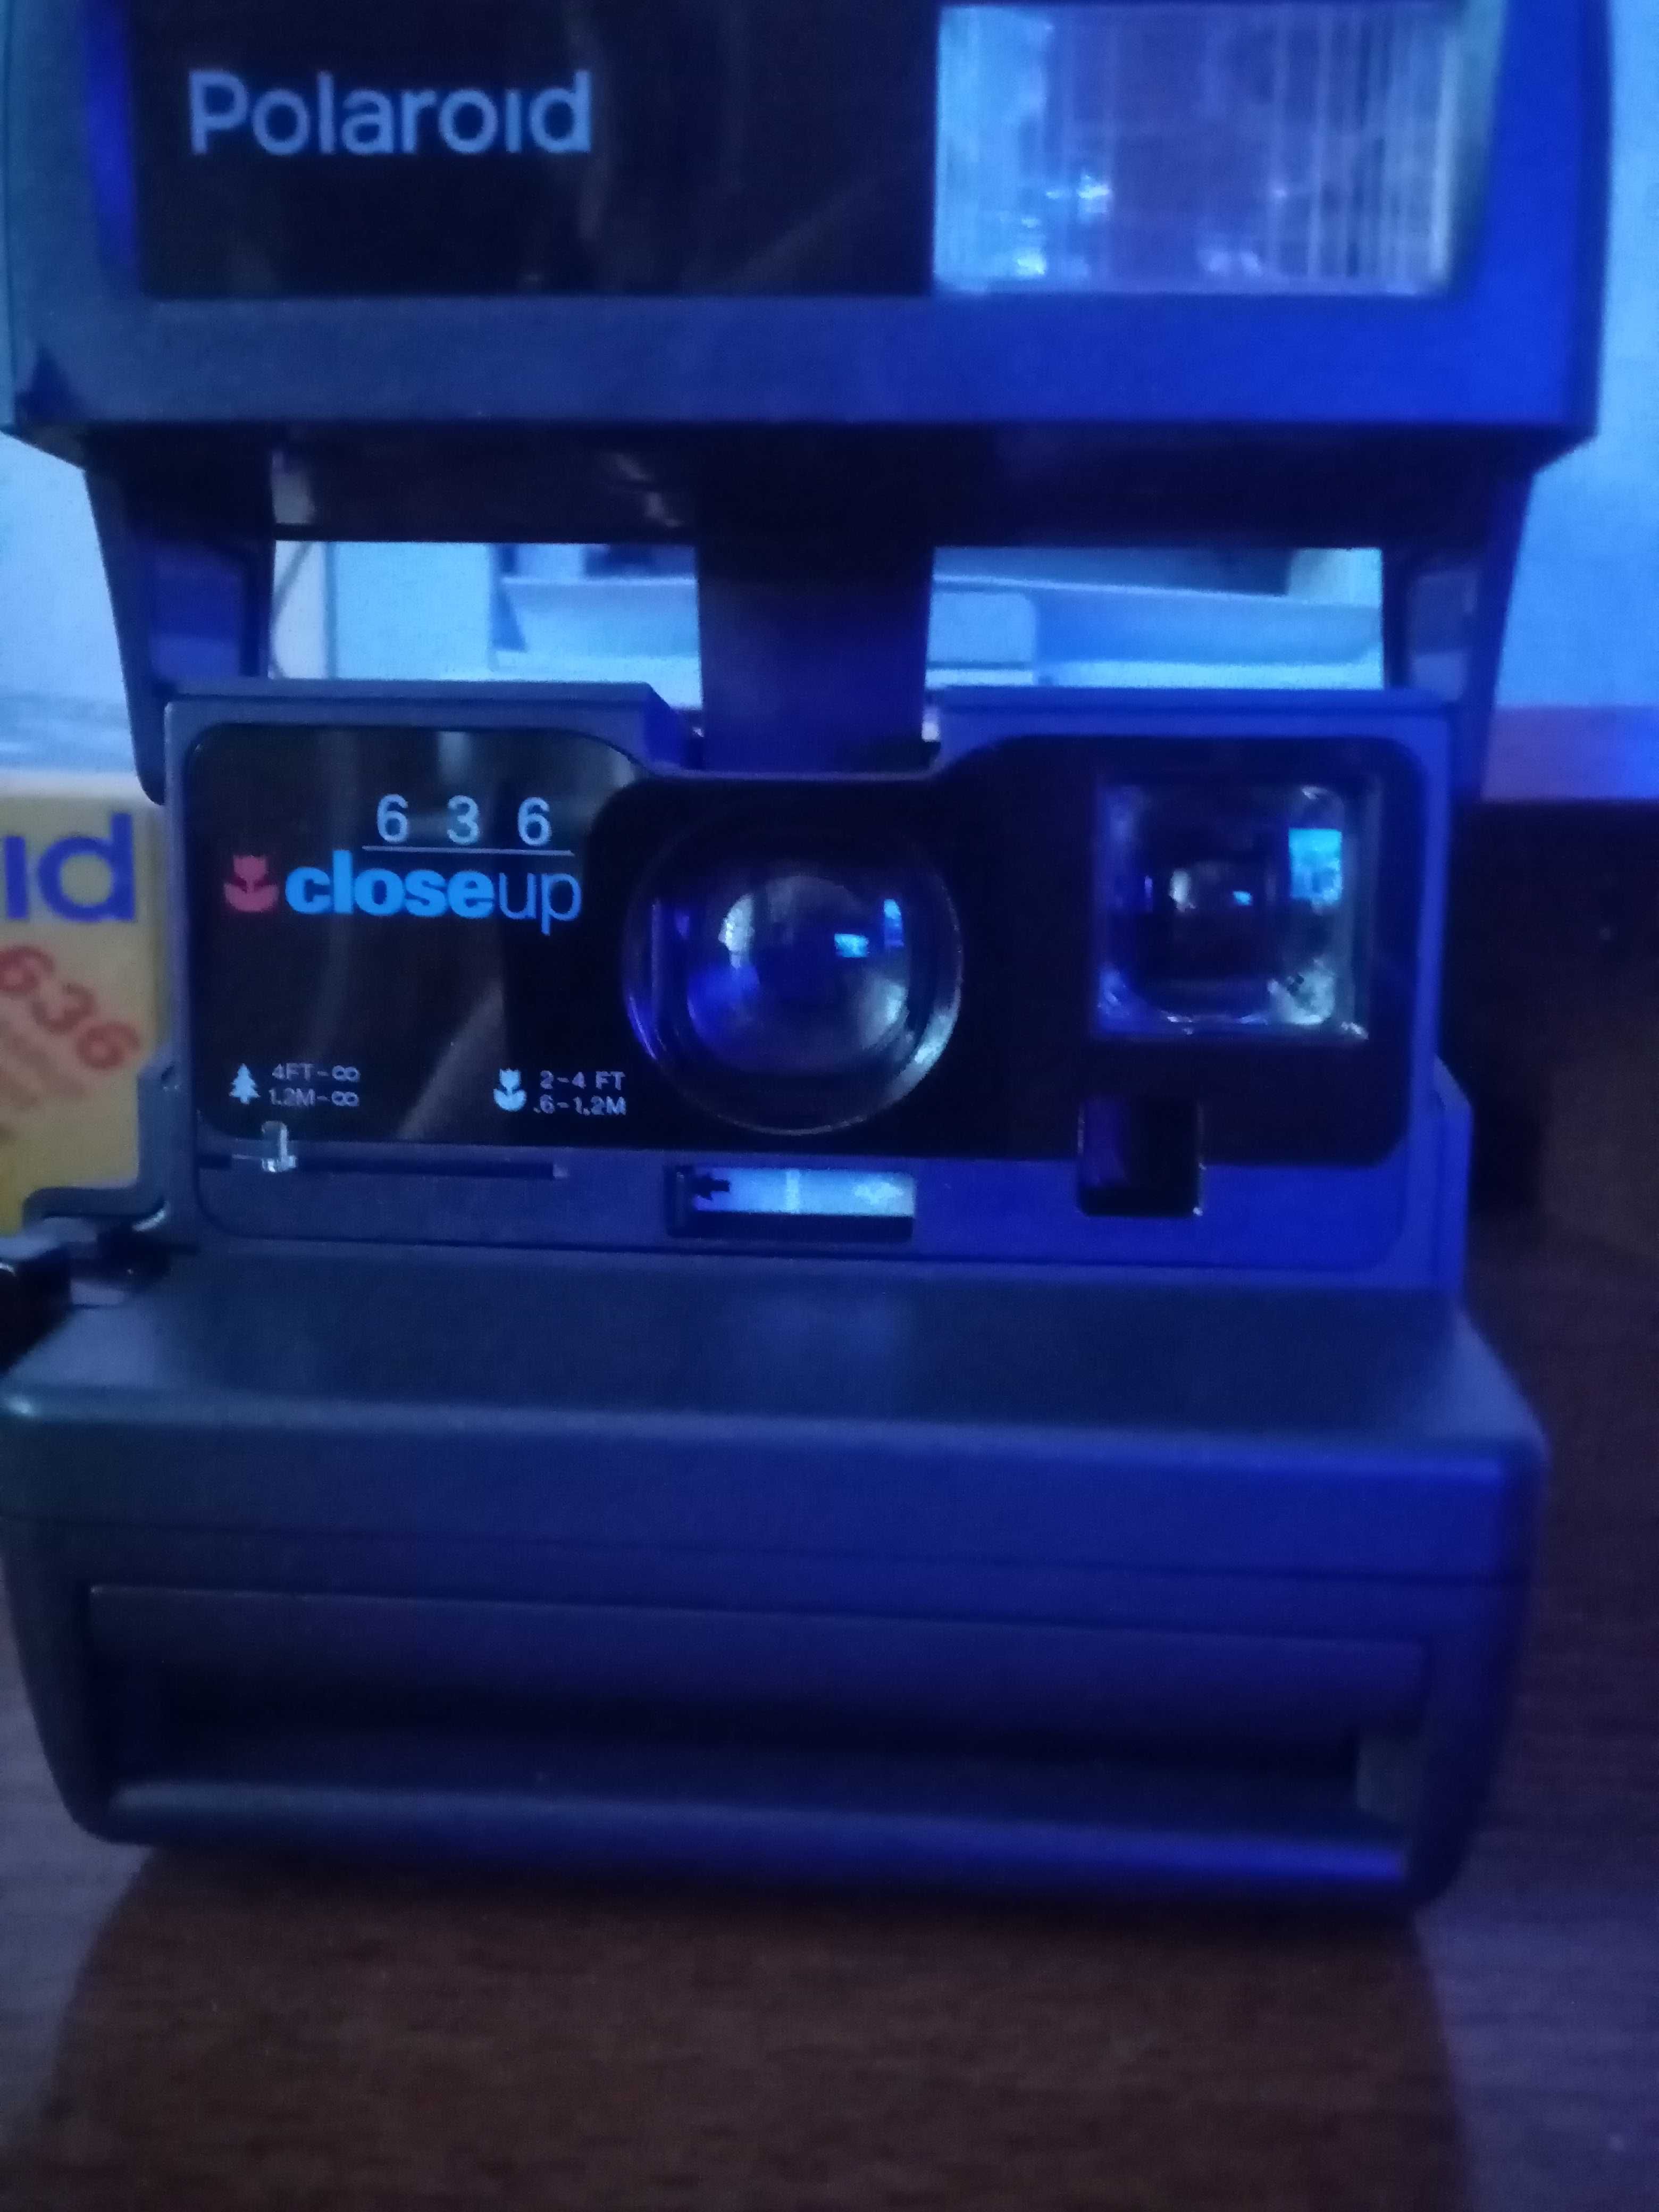 Фотоаппарат Polaroid Closeup 636